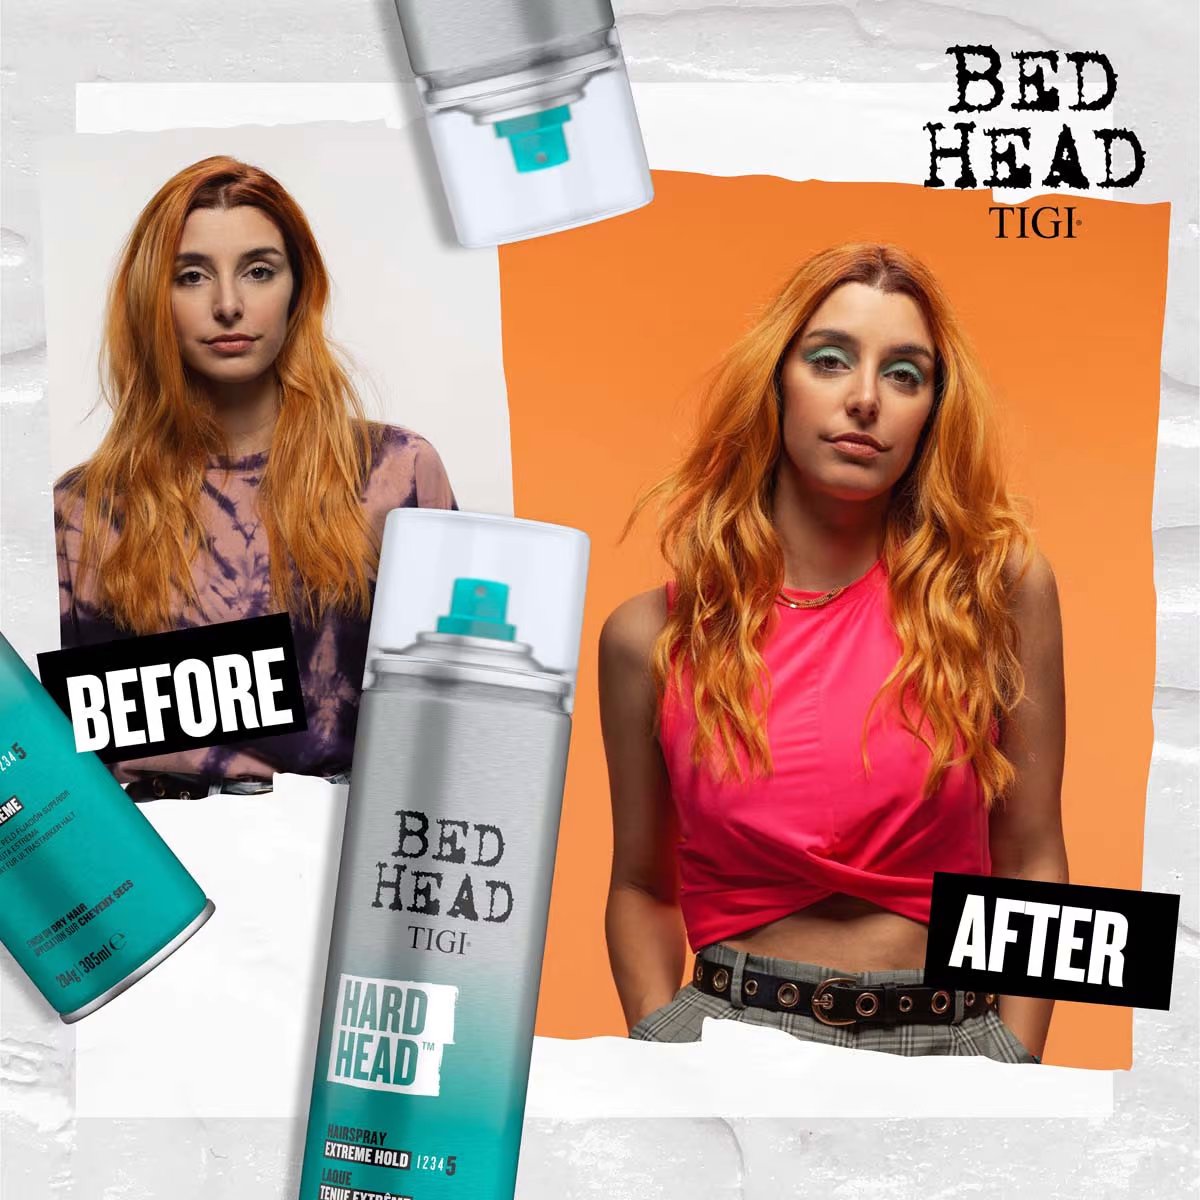 TIGI BED HEAD Hard Head Hairspray for Extra Hold